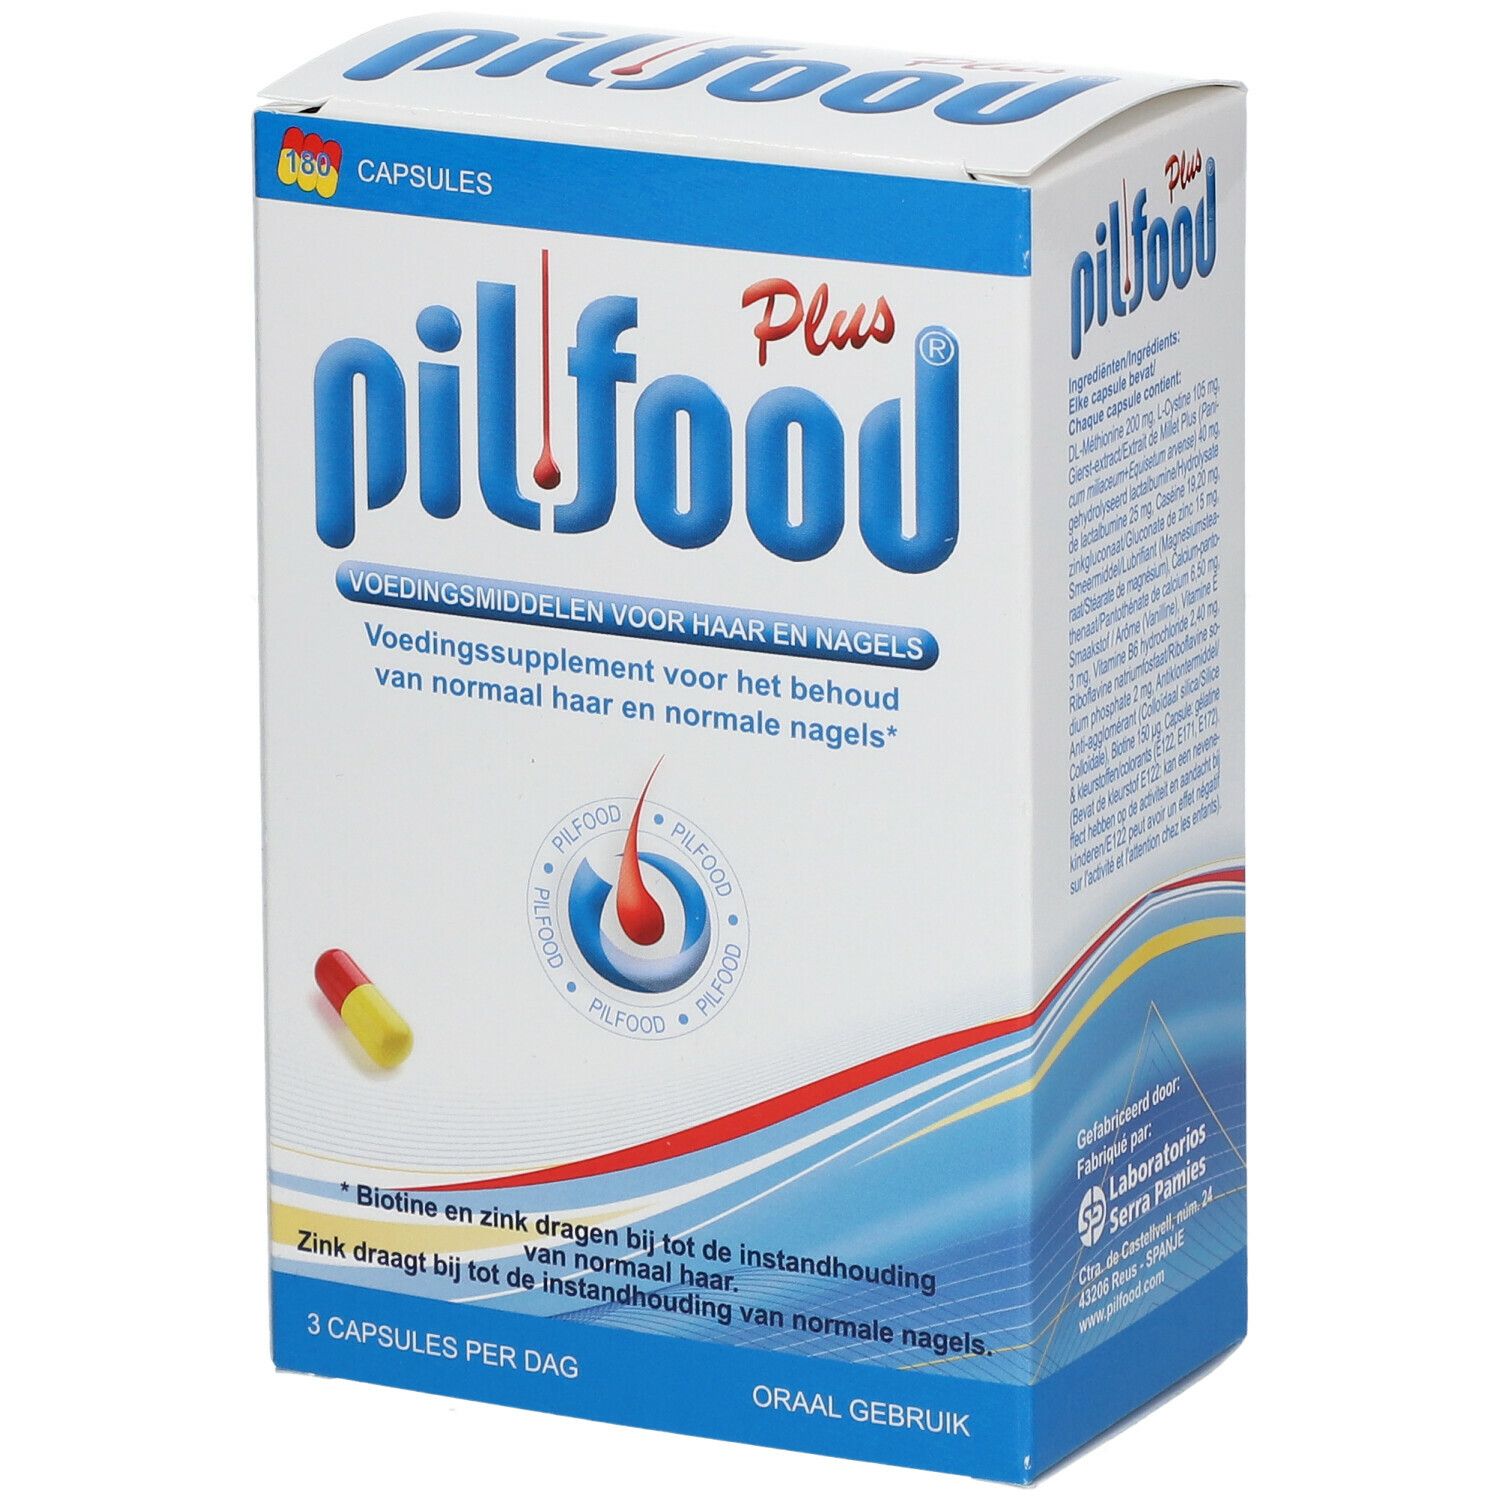 Pilfood Plus